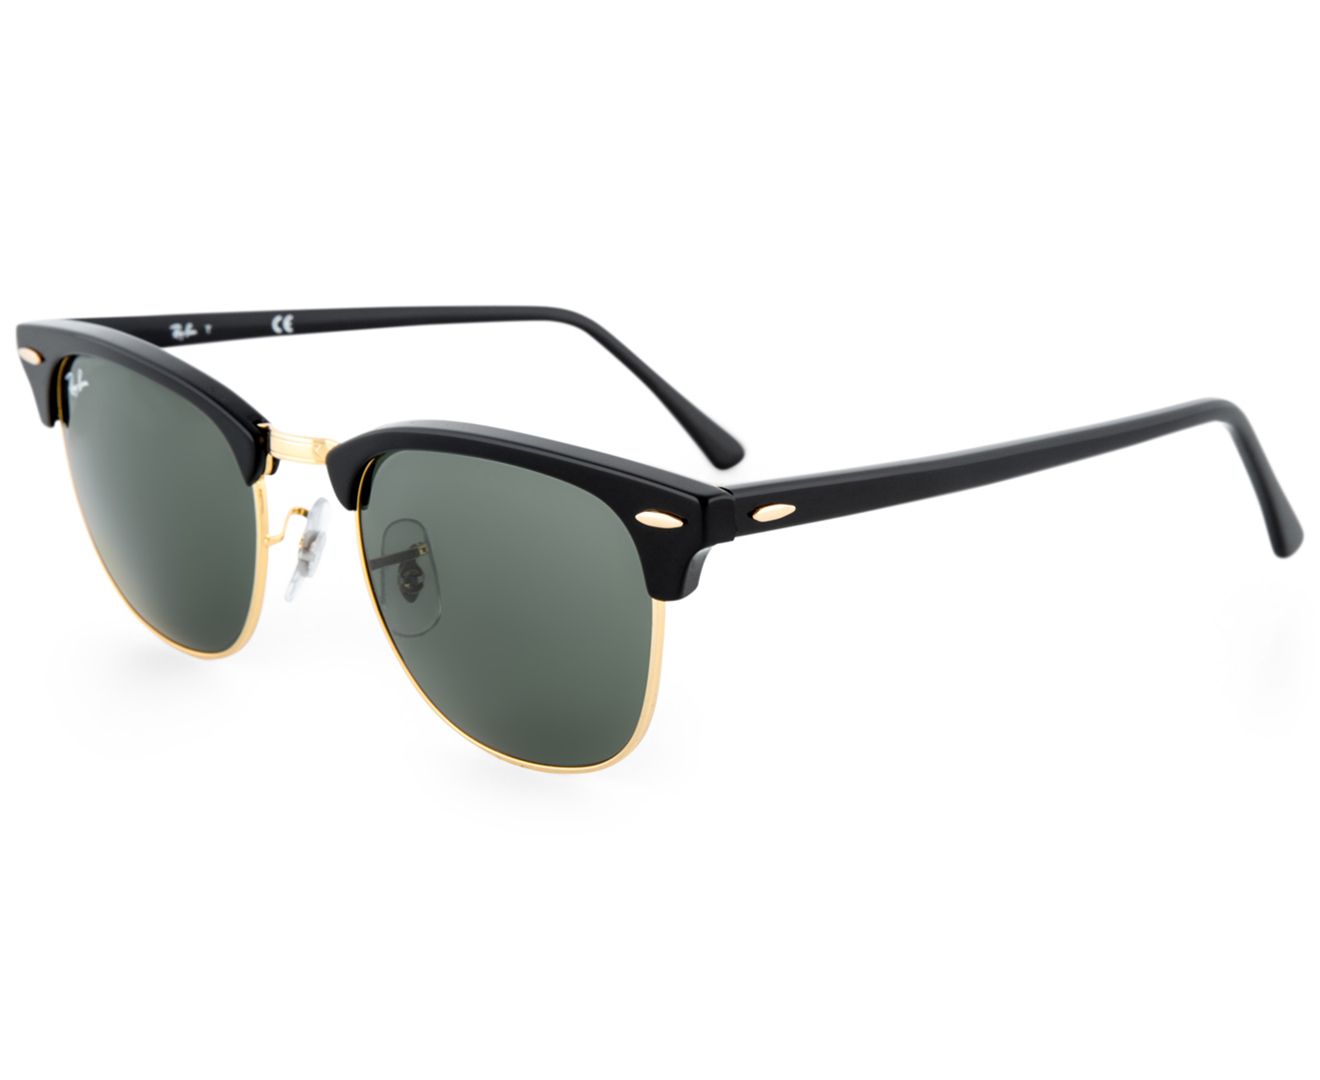 Ray-Ban Classic Clubmaster RB3016 Sunglasses - Black | Catch.com.au